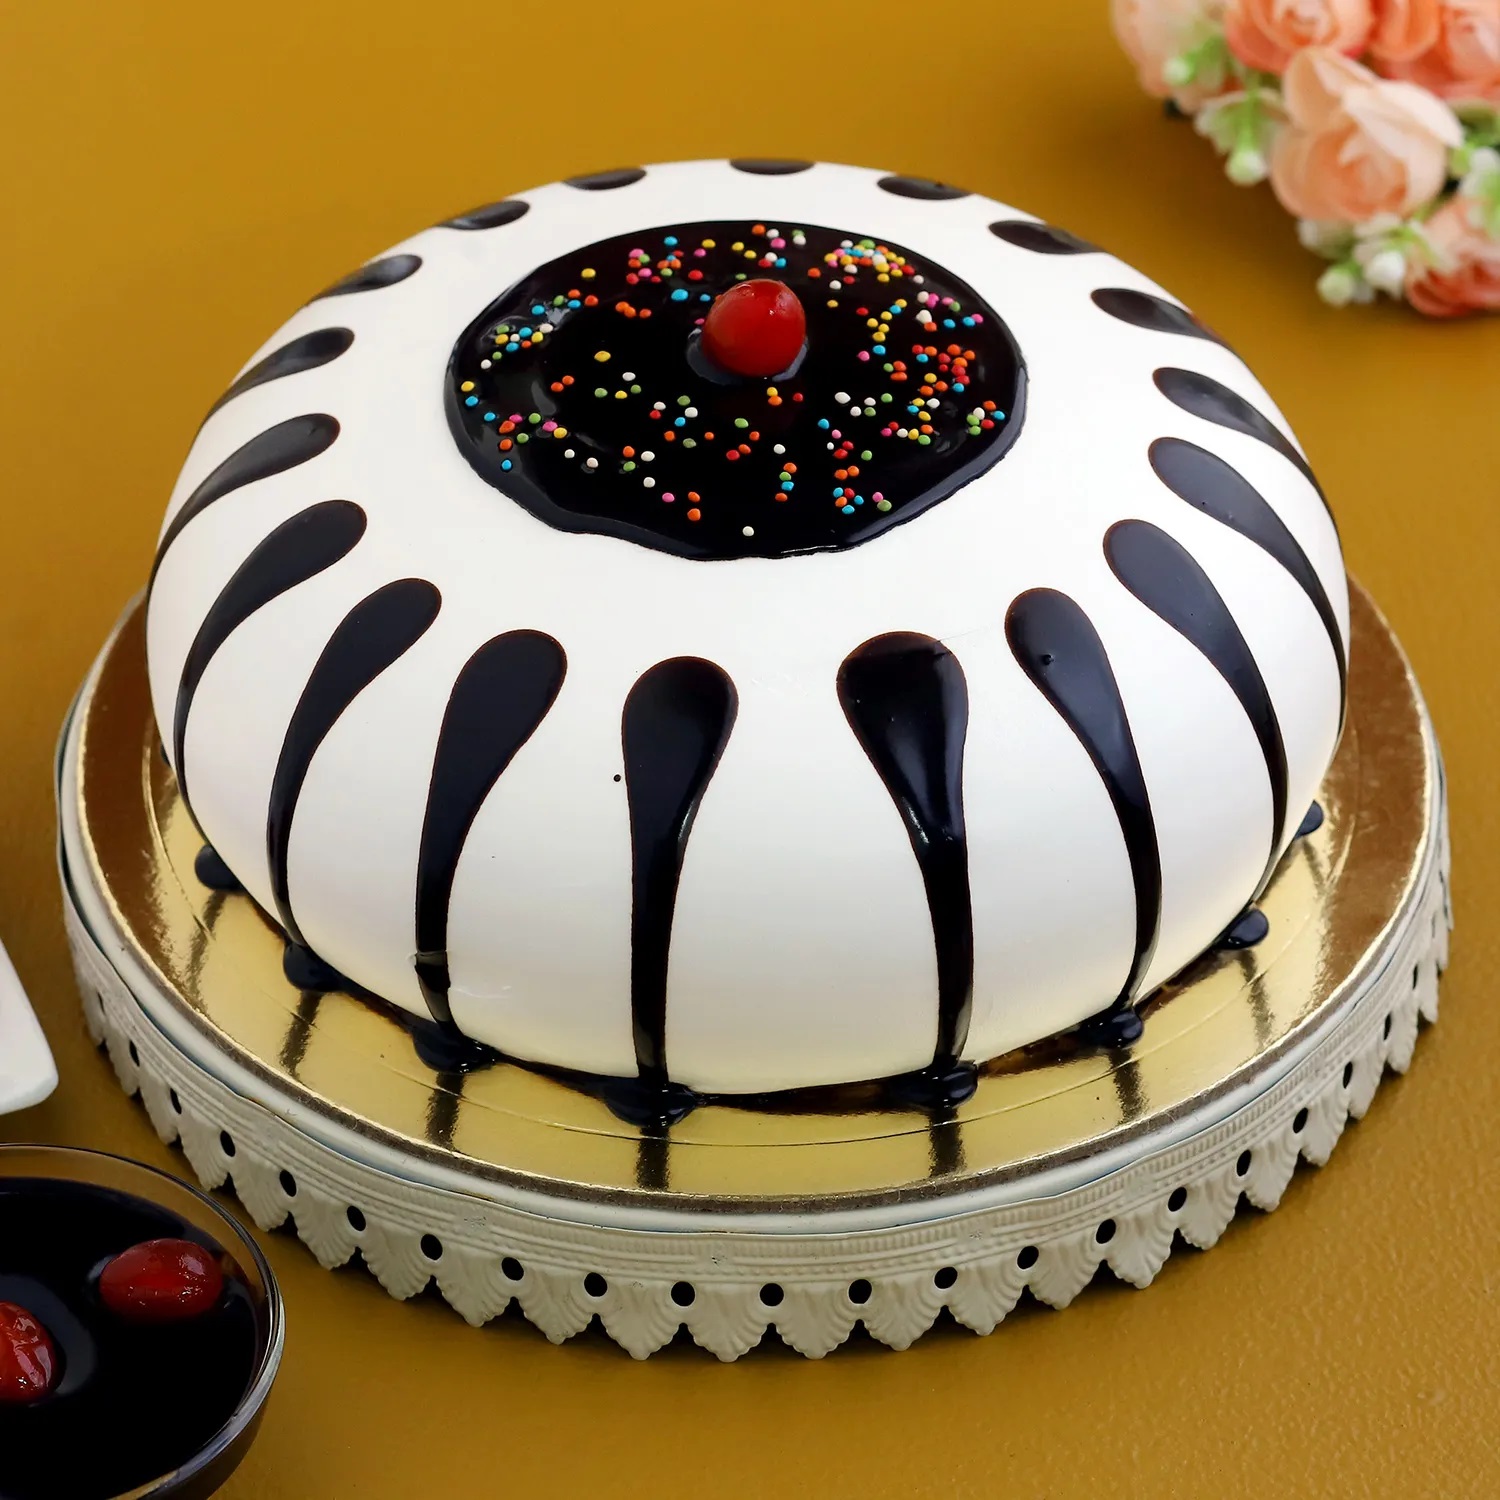 Anniversary Cake Design #cake #cakedecorating #cakedesign #cakeart  #cakedecorator #cakestyle #cakeoftheday | Instagram